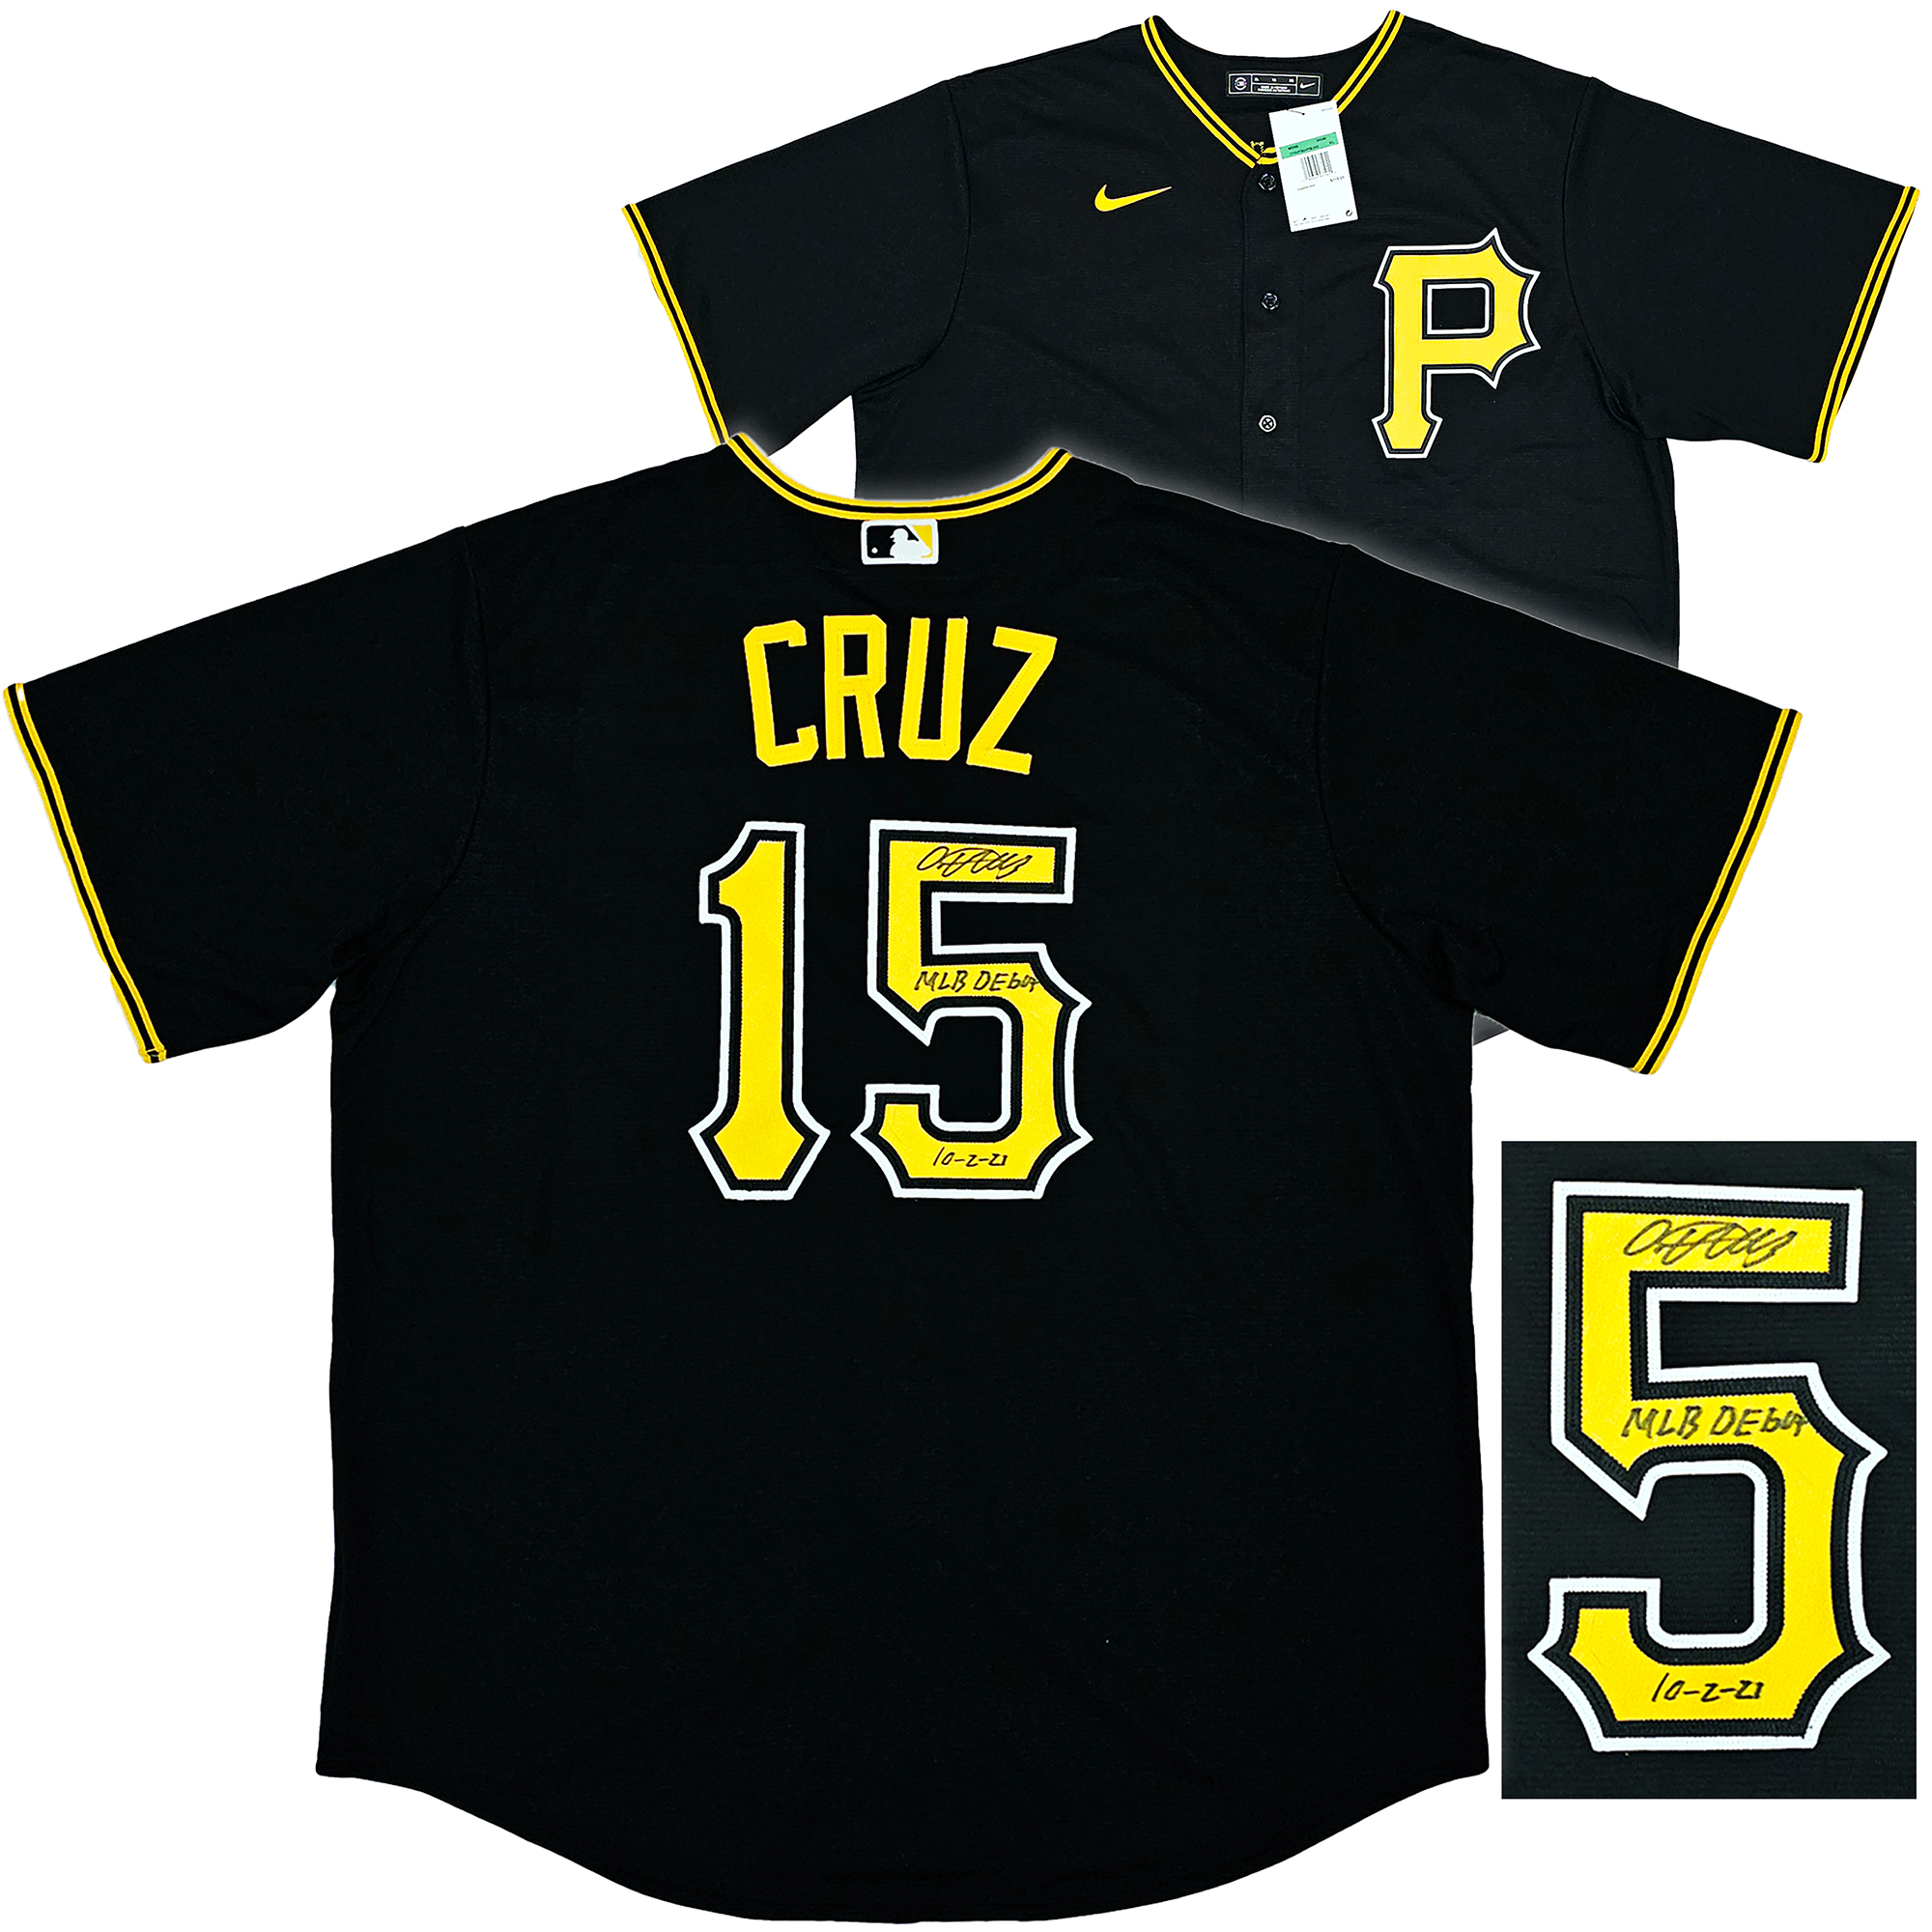 Pittsburgh Pirates Oneil Cruz Autographed White Nike Jersey Size XL MLB  Debut 10-2-21 Beckett BAS QR Stock #220603